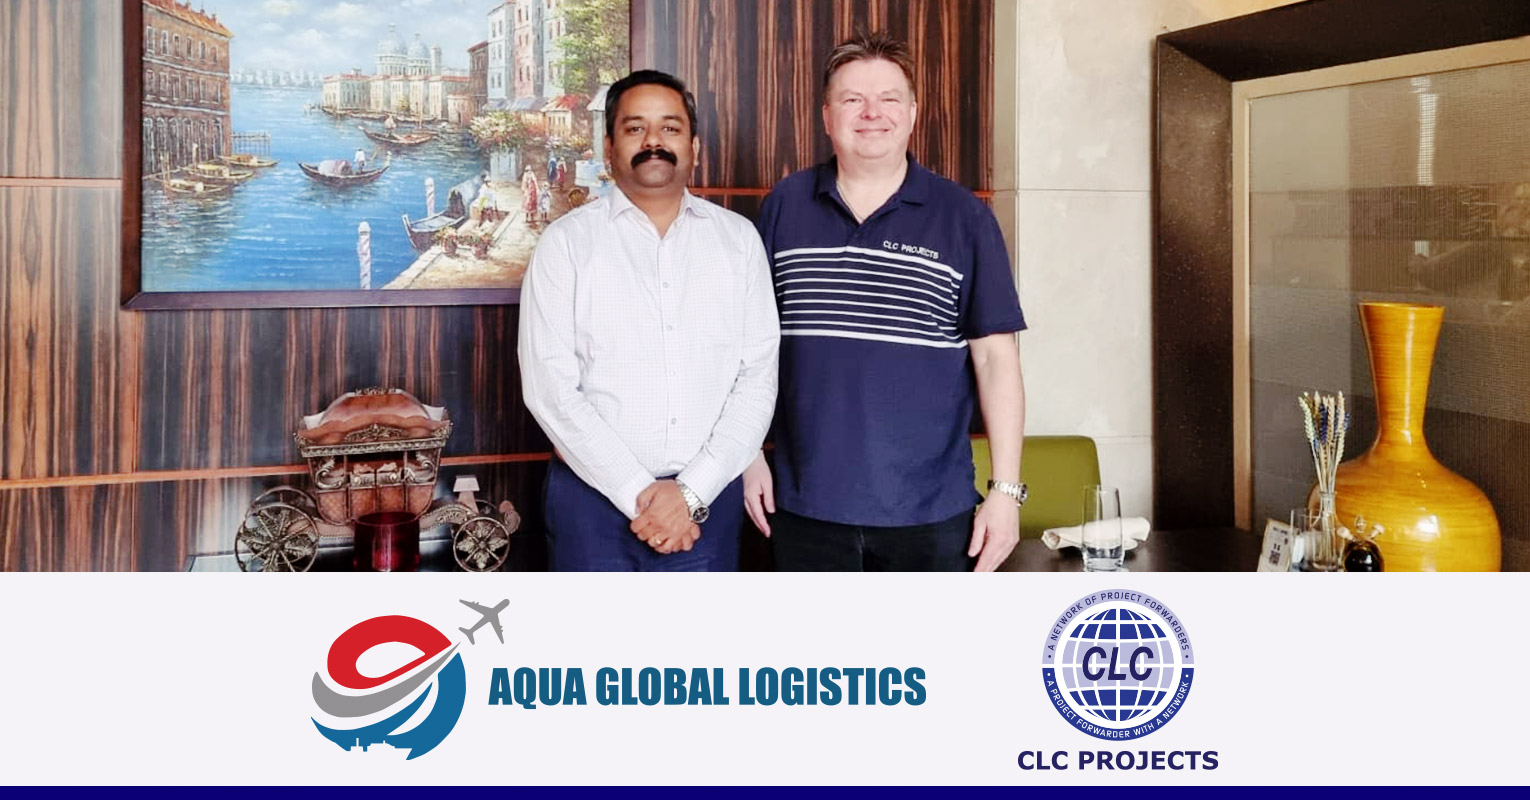 CLC Projects Chairman met with Prathap Sridharan, General Manager of Aqua Global Logistics in Doha, Qatar